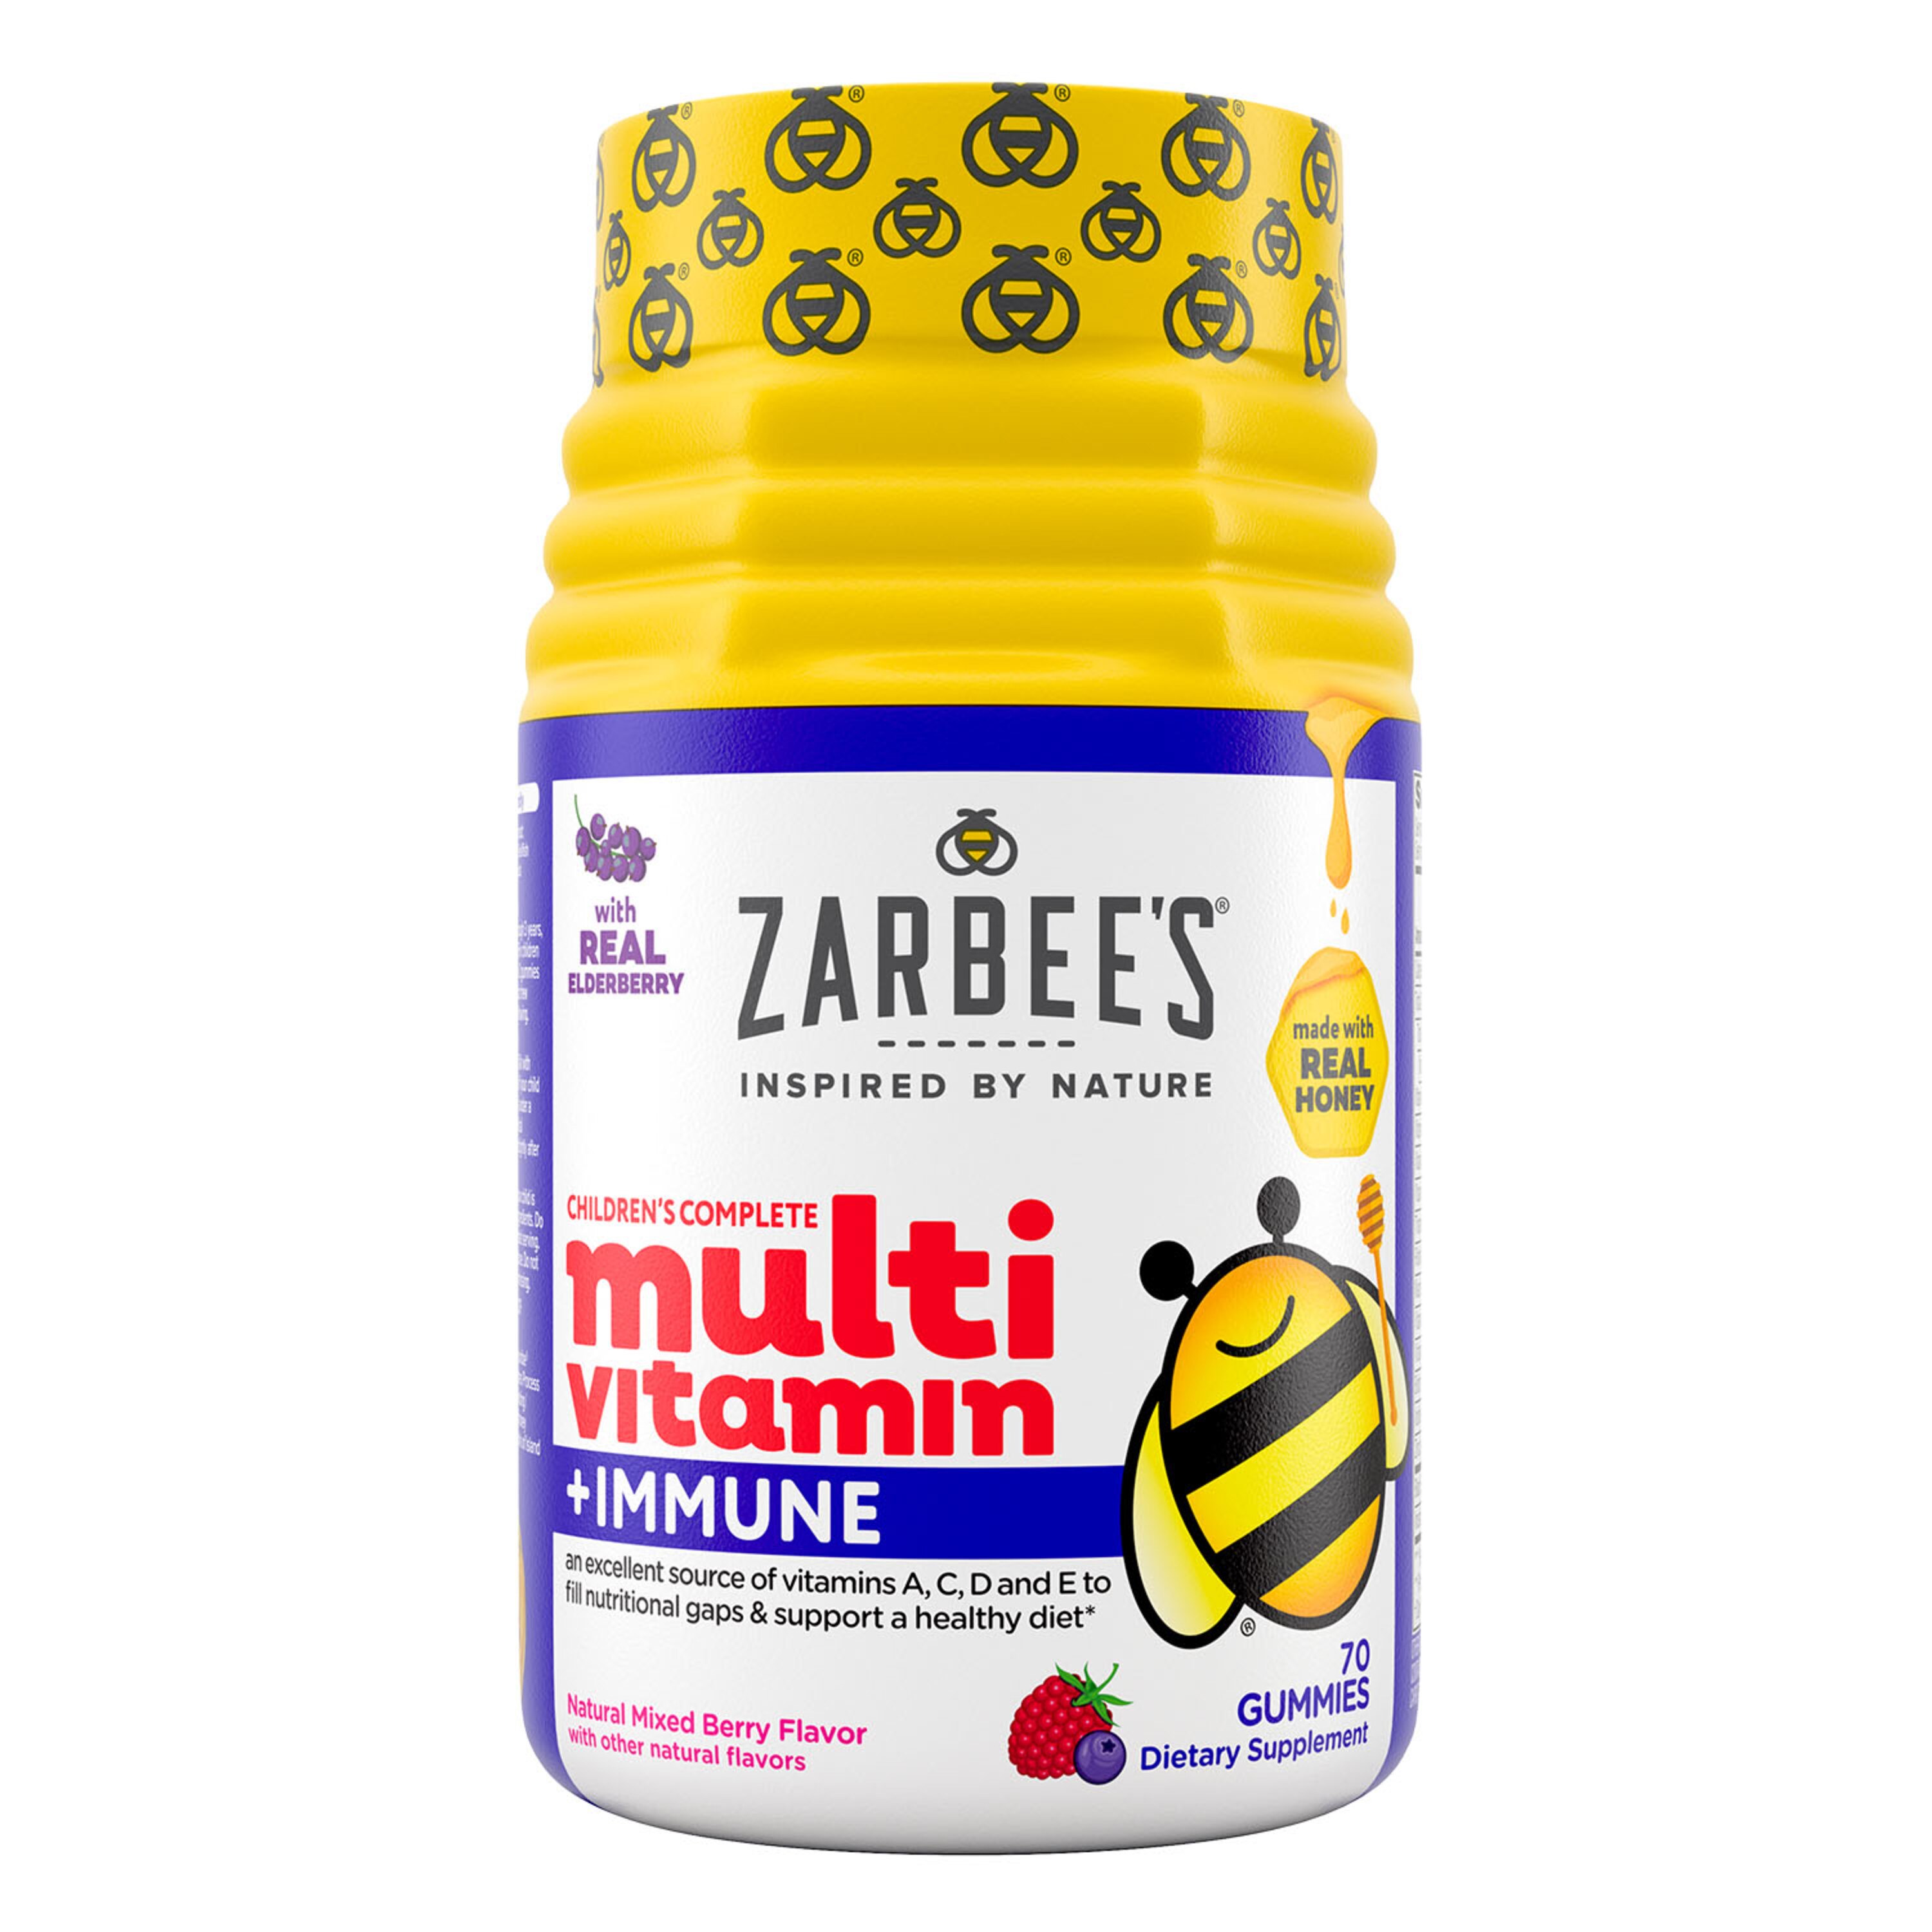 Zarbee's Naturals Children's Complete Multivitamin + Immune* Gummies, Mixed Berry, 70